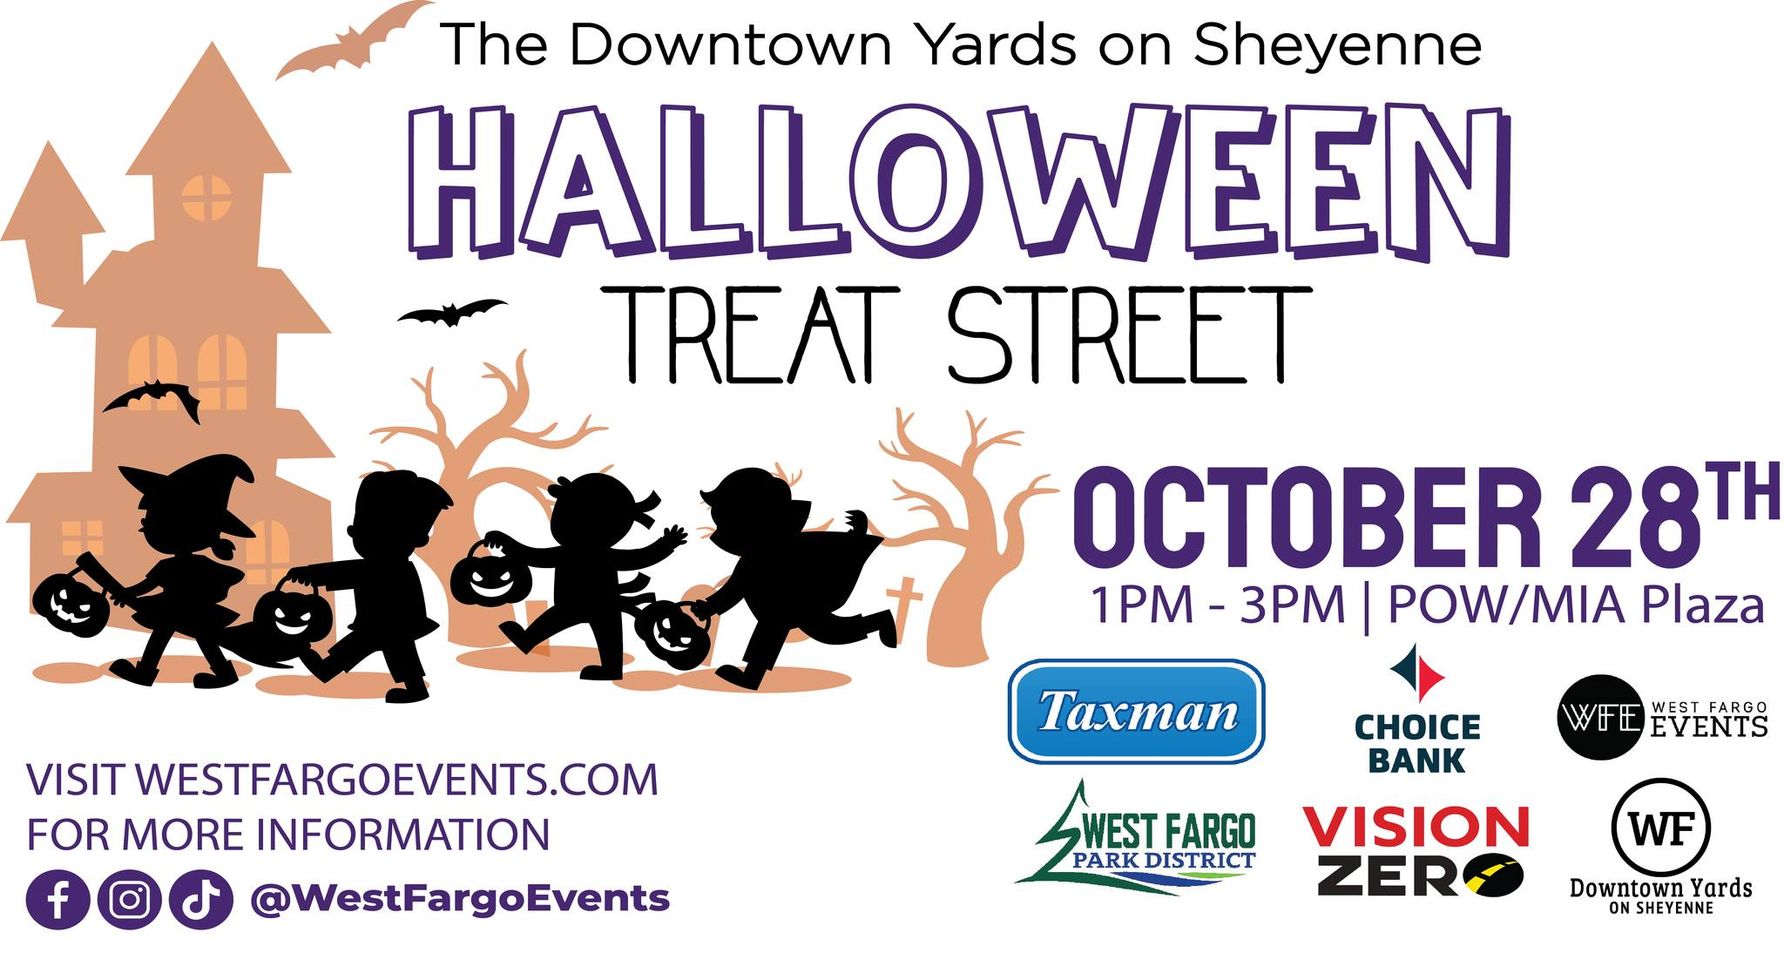 Halloween Treat Street - West Fargo Events